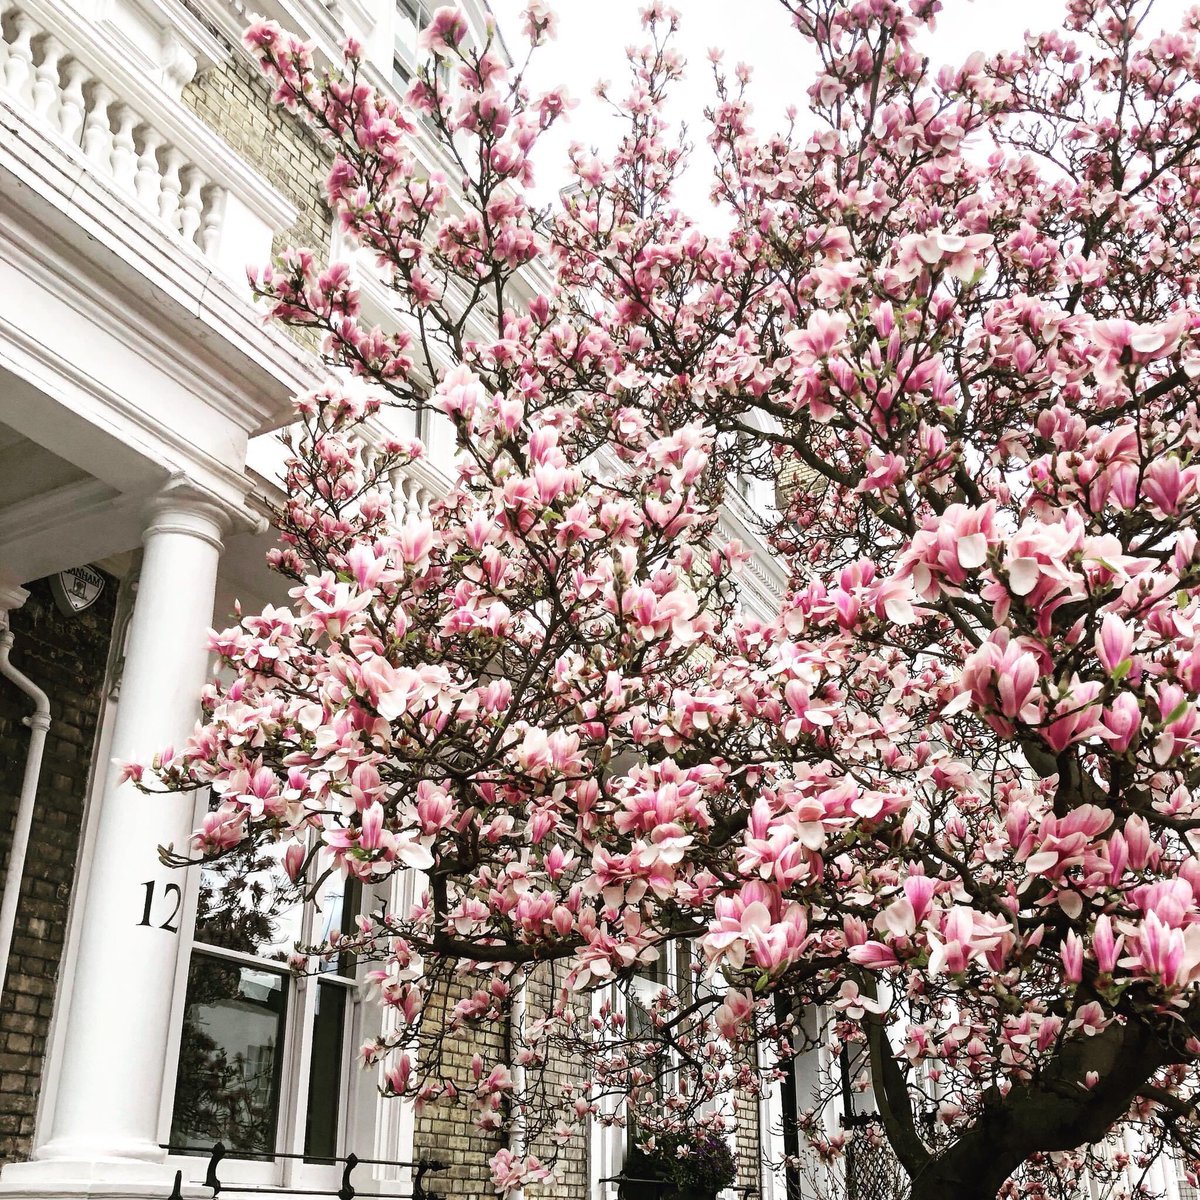 London is blossoming in Spring. 🌸 Good Morning!
.
.
.
.
.
.
.
.
.
#springinlondon #spring #blossom #blossoms #cherryblossom #london #studyinlondon #southkensington #morning #goodmorning #student #davidgame #davidgamecollege #pink #earth #naturalbeauty #studyinuk #alevel #gcse